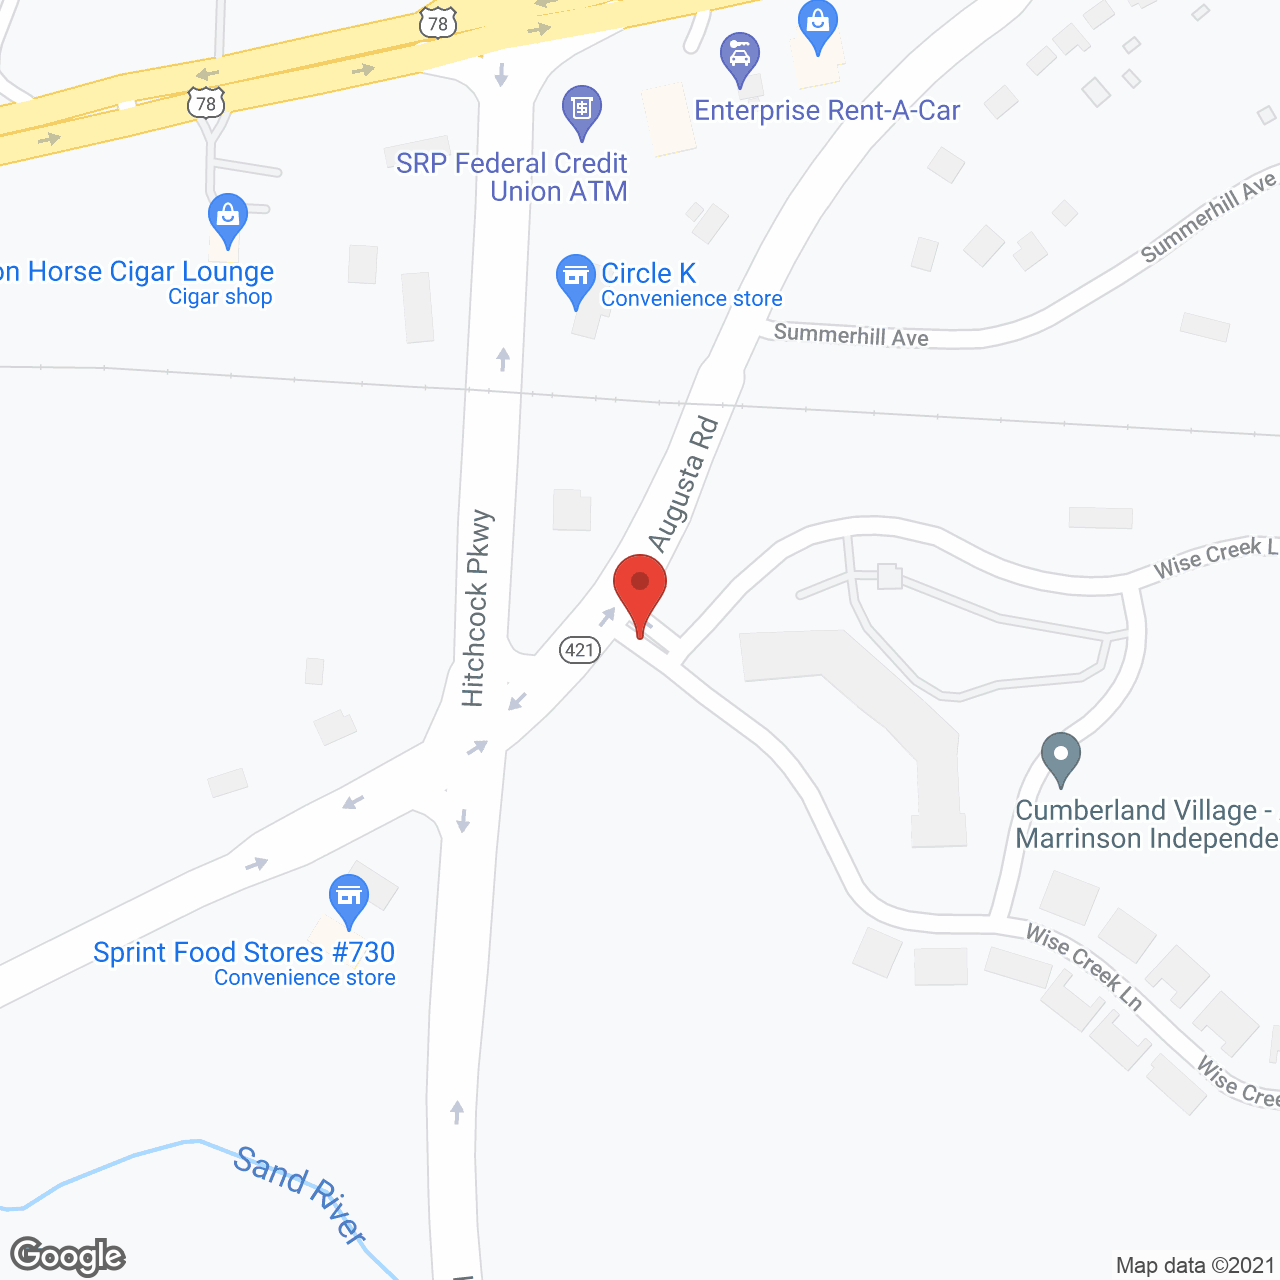 Hills of Cumberland Village in google map